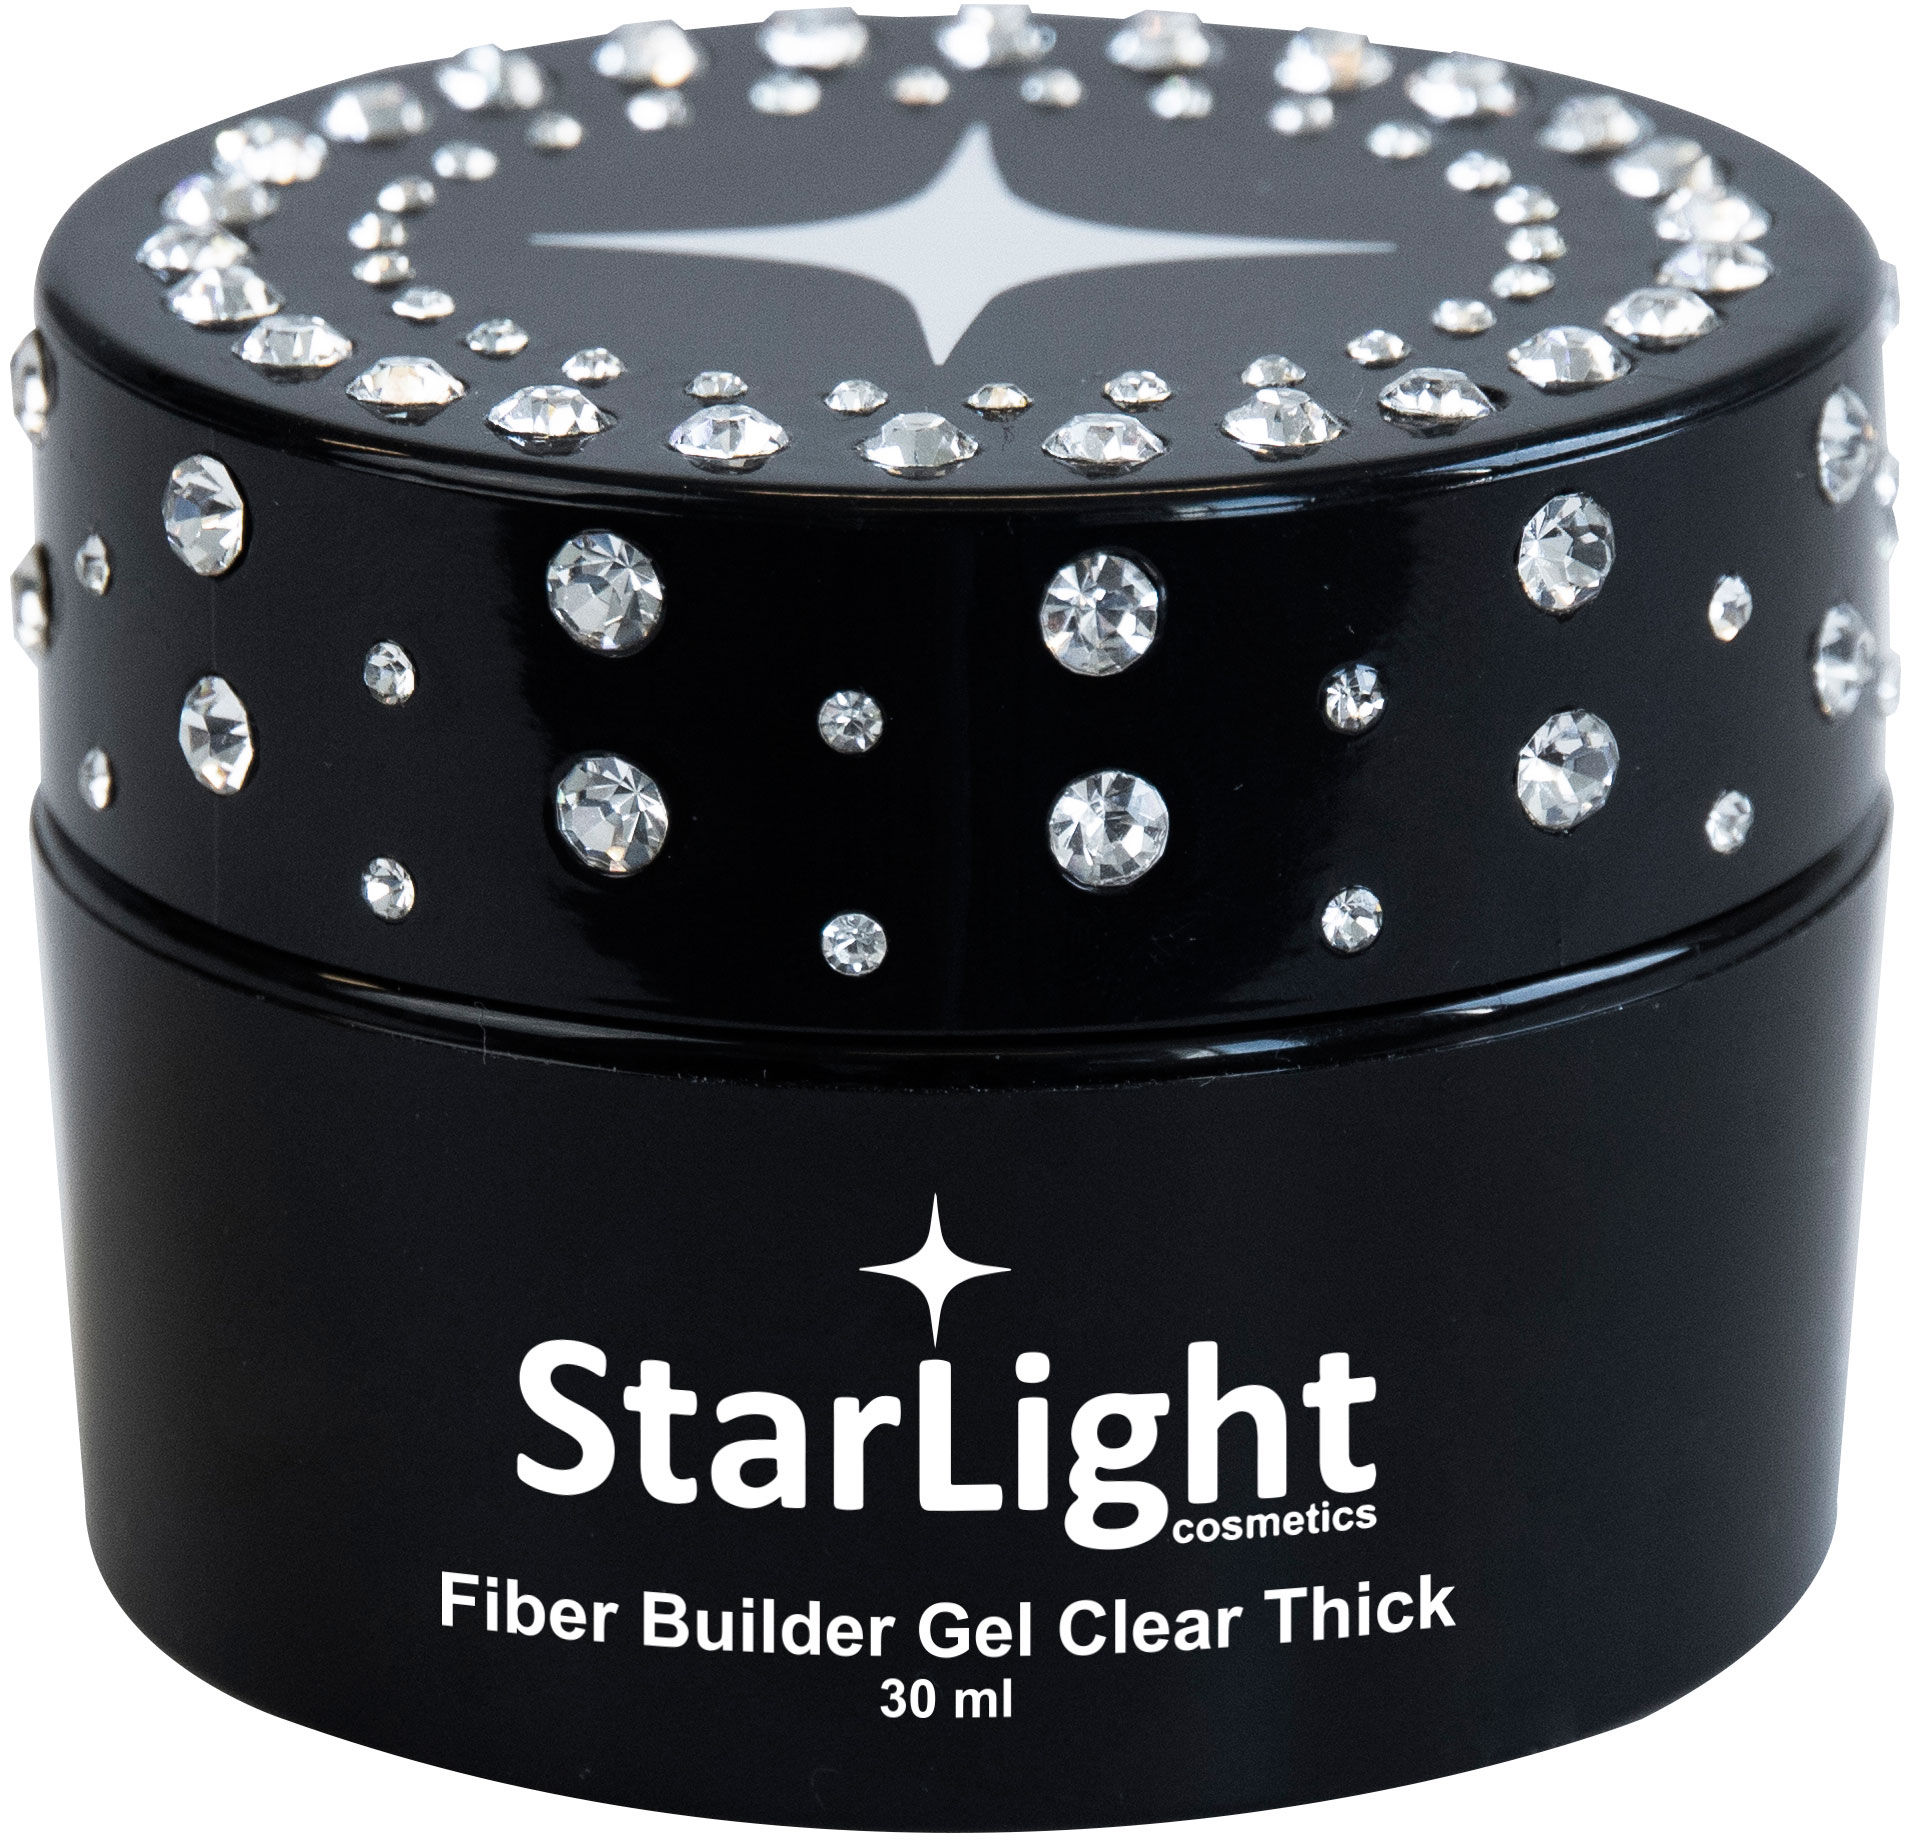 Naglar Fiber Builder Gel Clear Thick - 30 ml